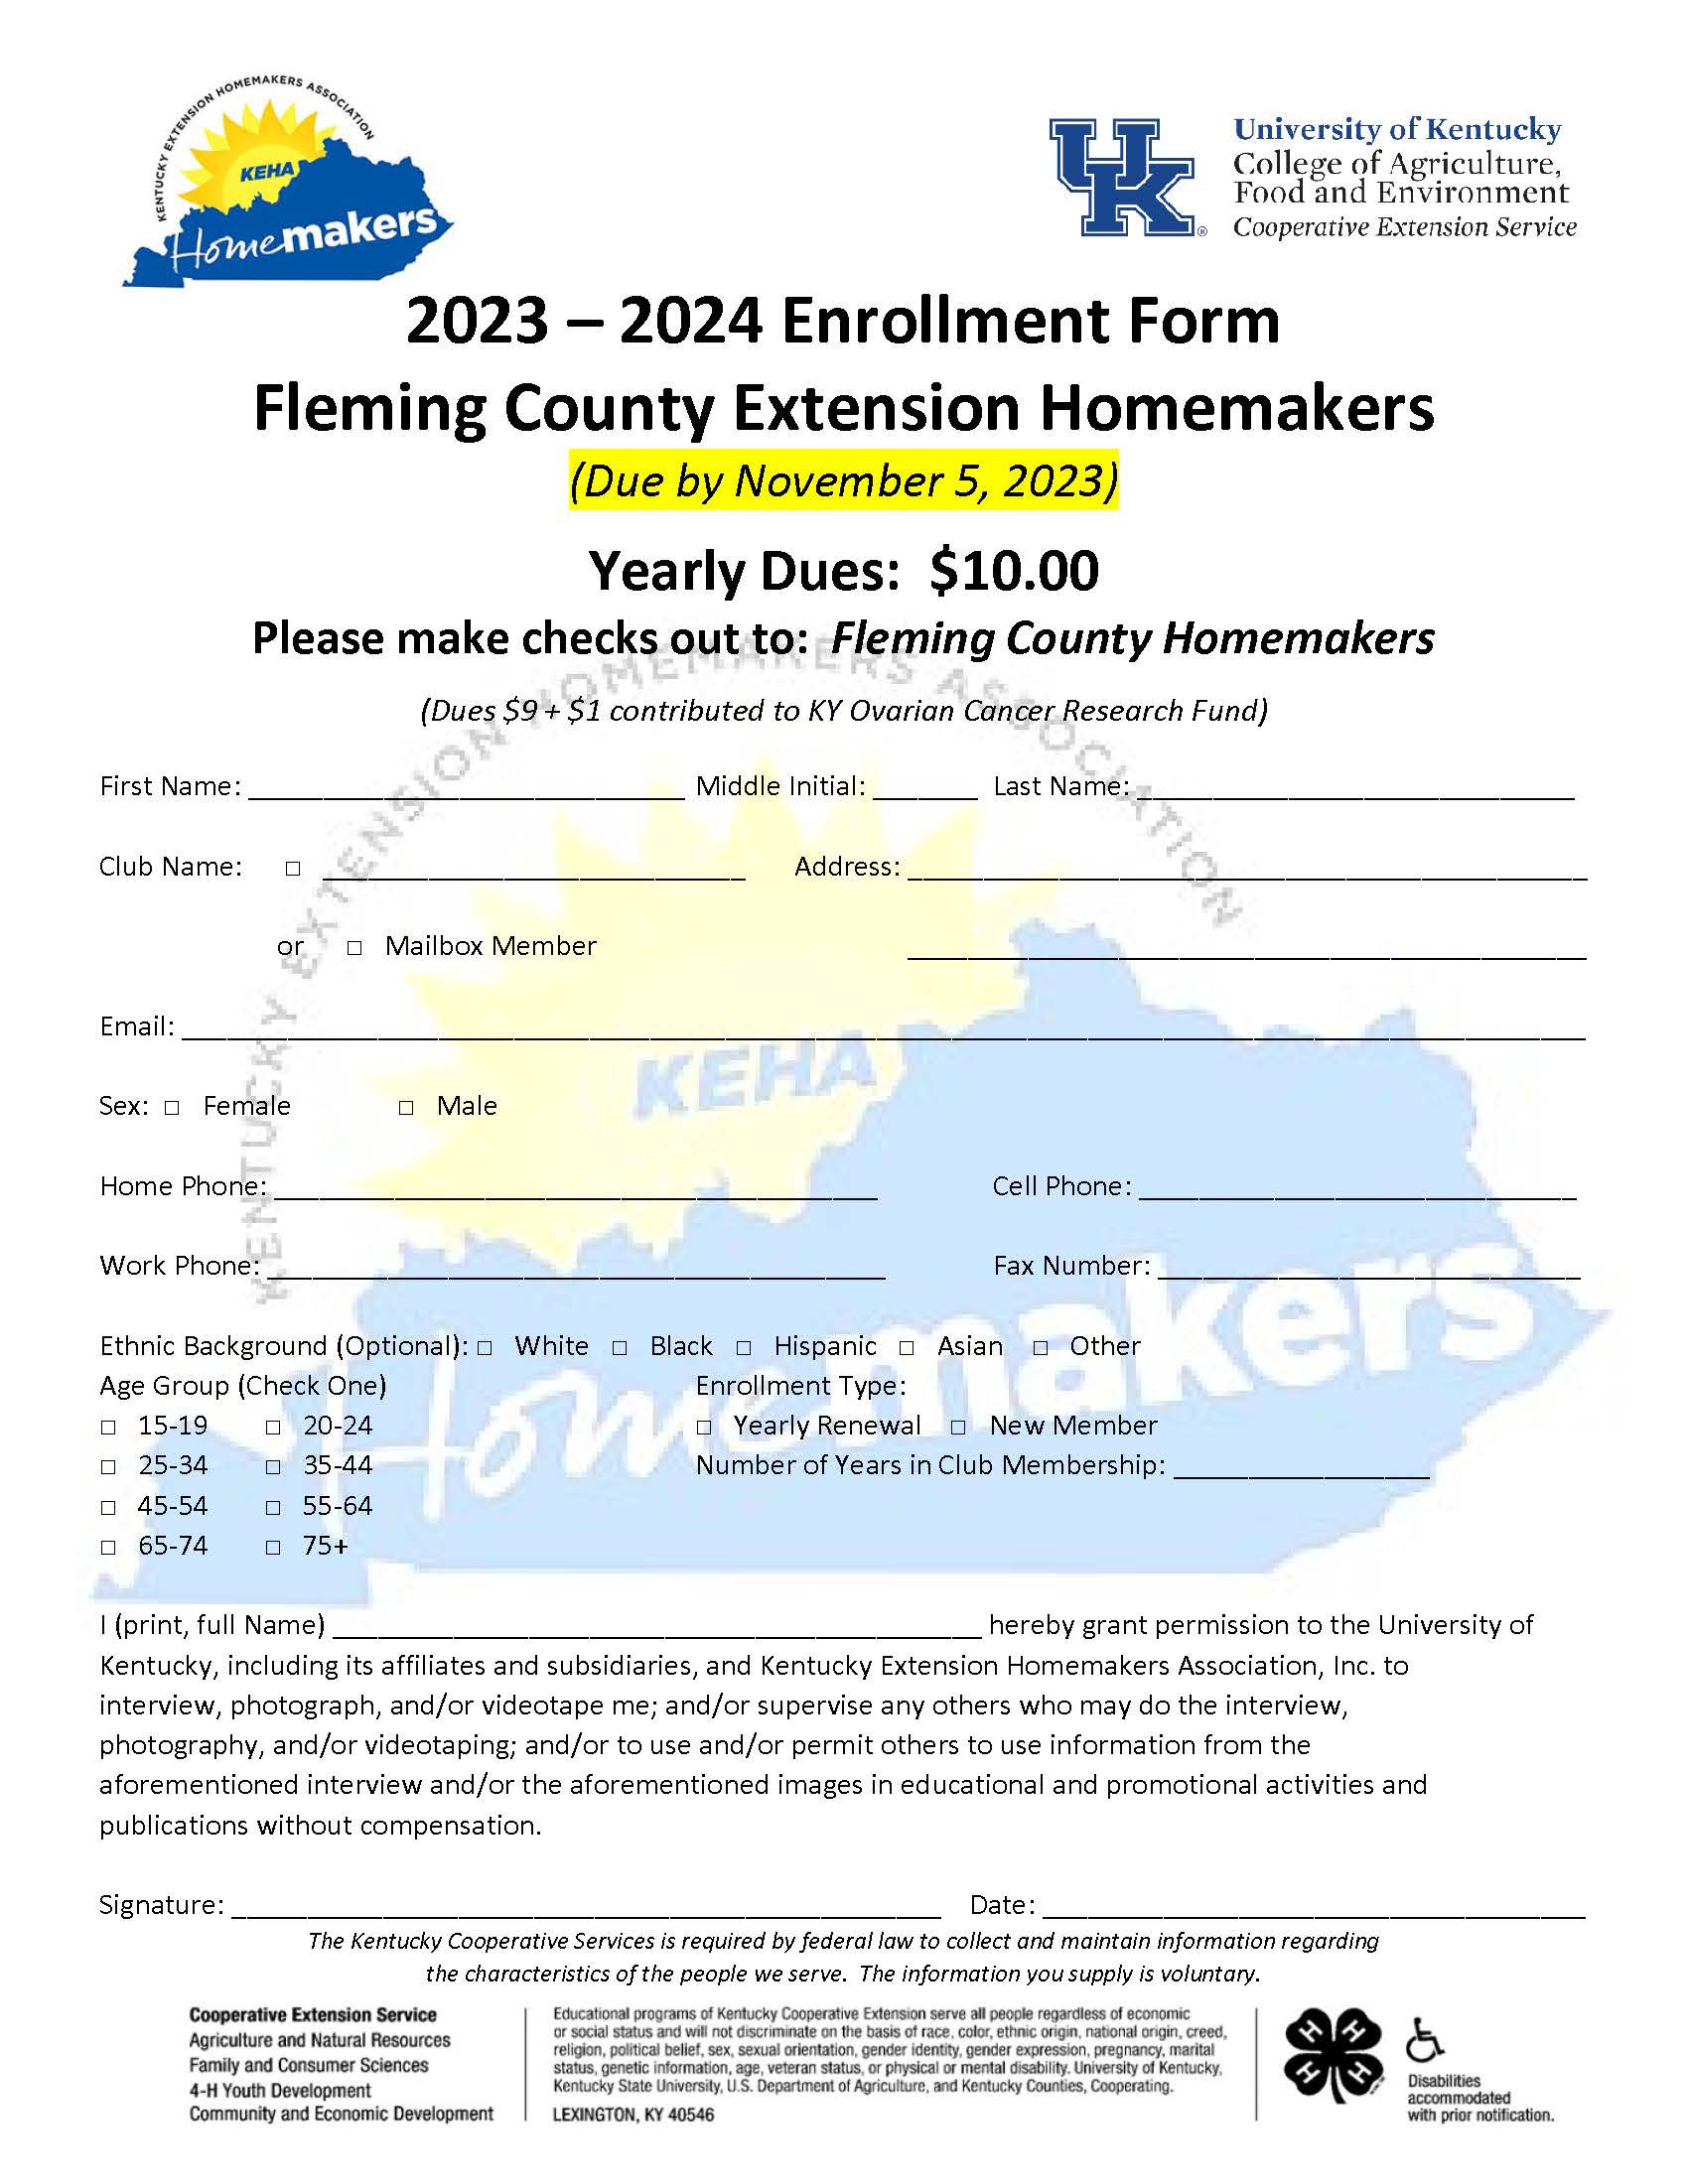 2023-2024 HM Enrollment Form 05-01-23